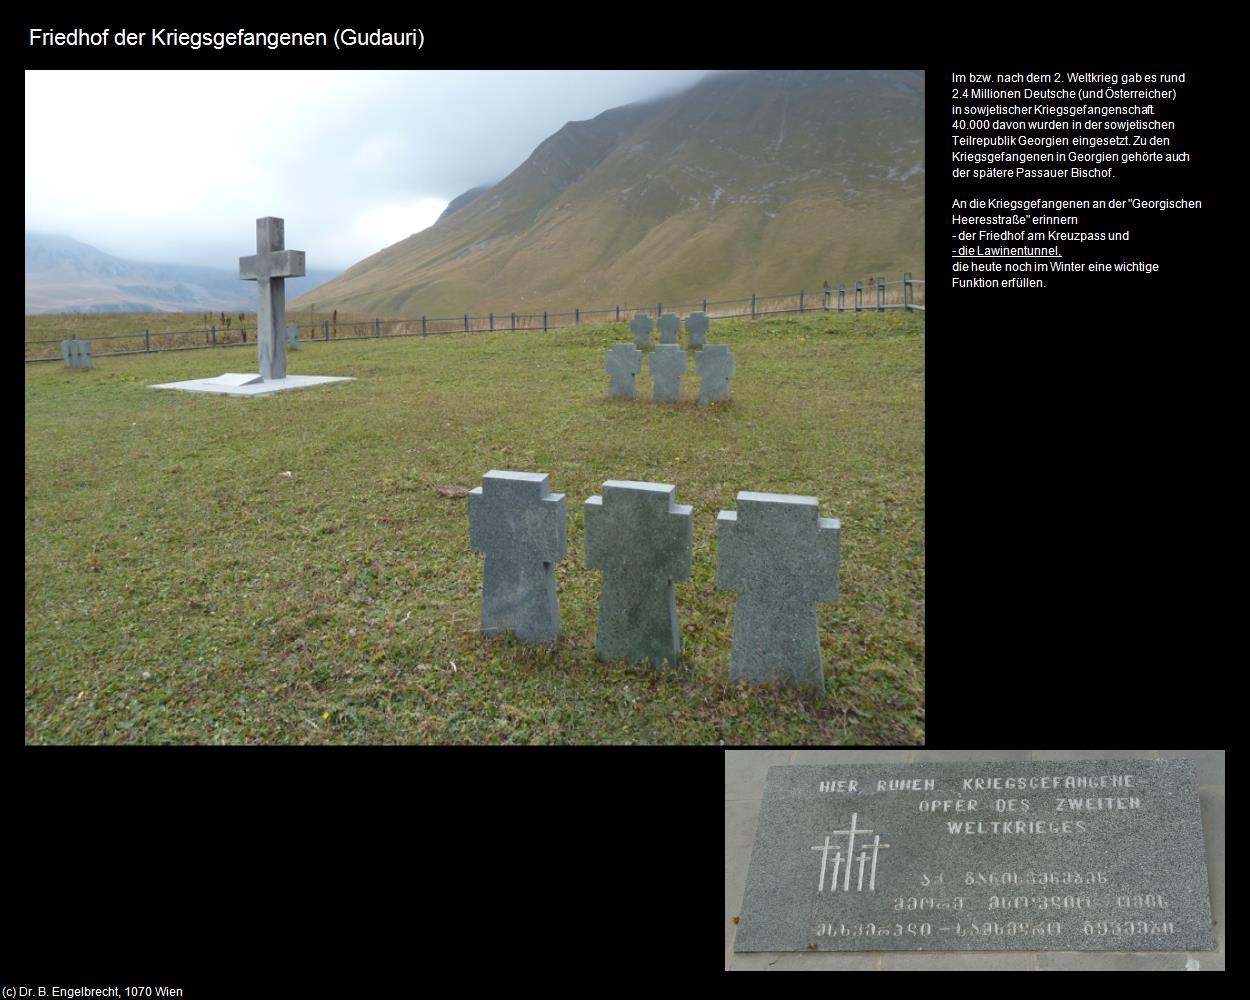 Friedhof der Kriegsgefangenen  (Gudauri) in GEORGIEN(c)B.Engelbrecht